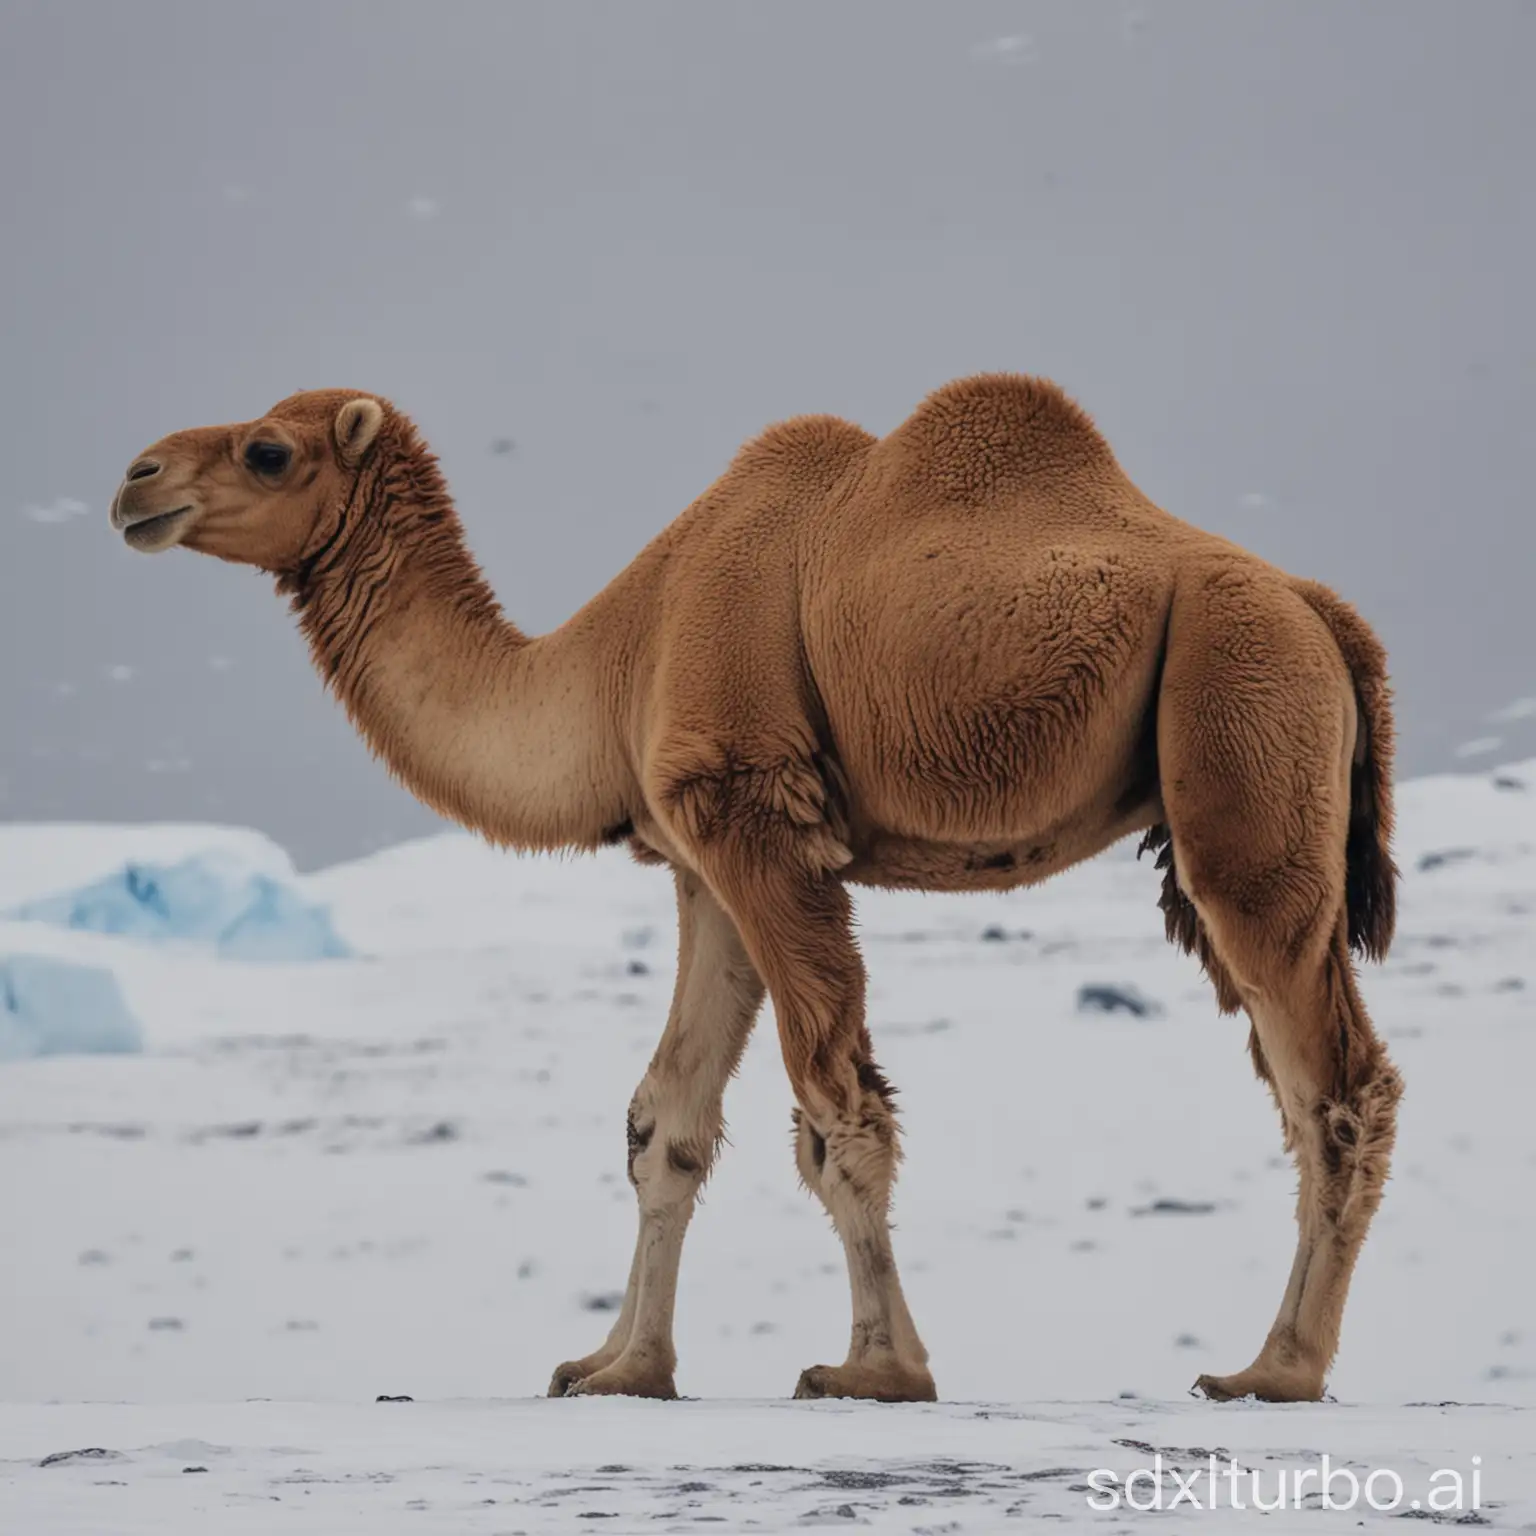 CAMEL IN ANTARTICA